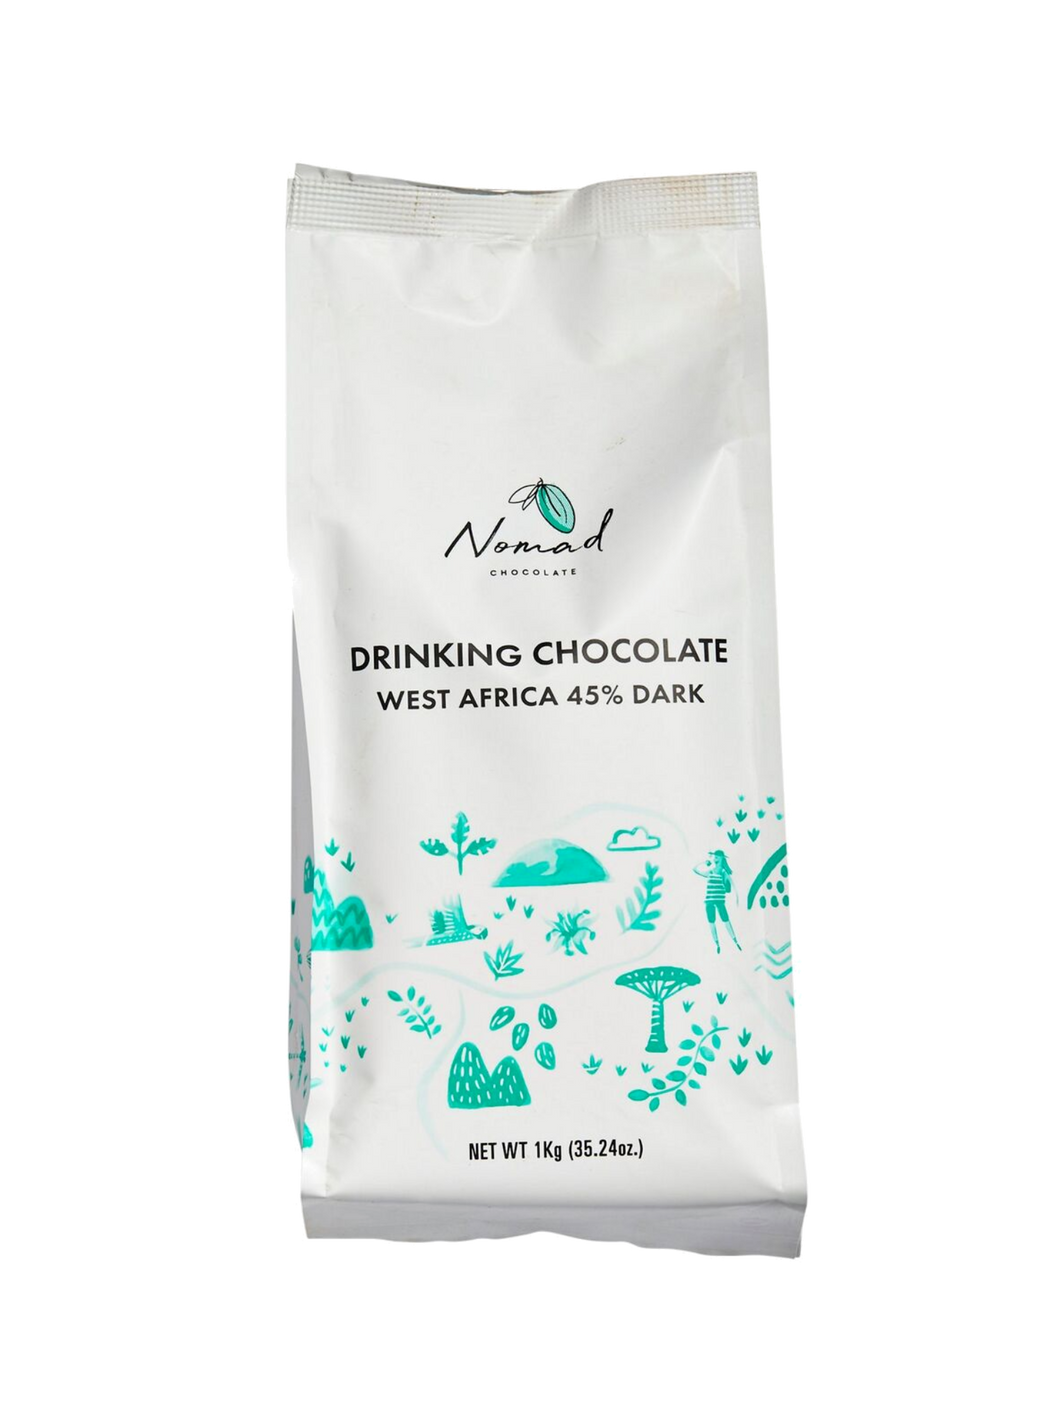 Nomad Drinking Chocolate West Africa 45% Dark,1kg bag front label.